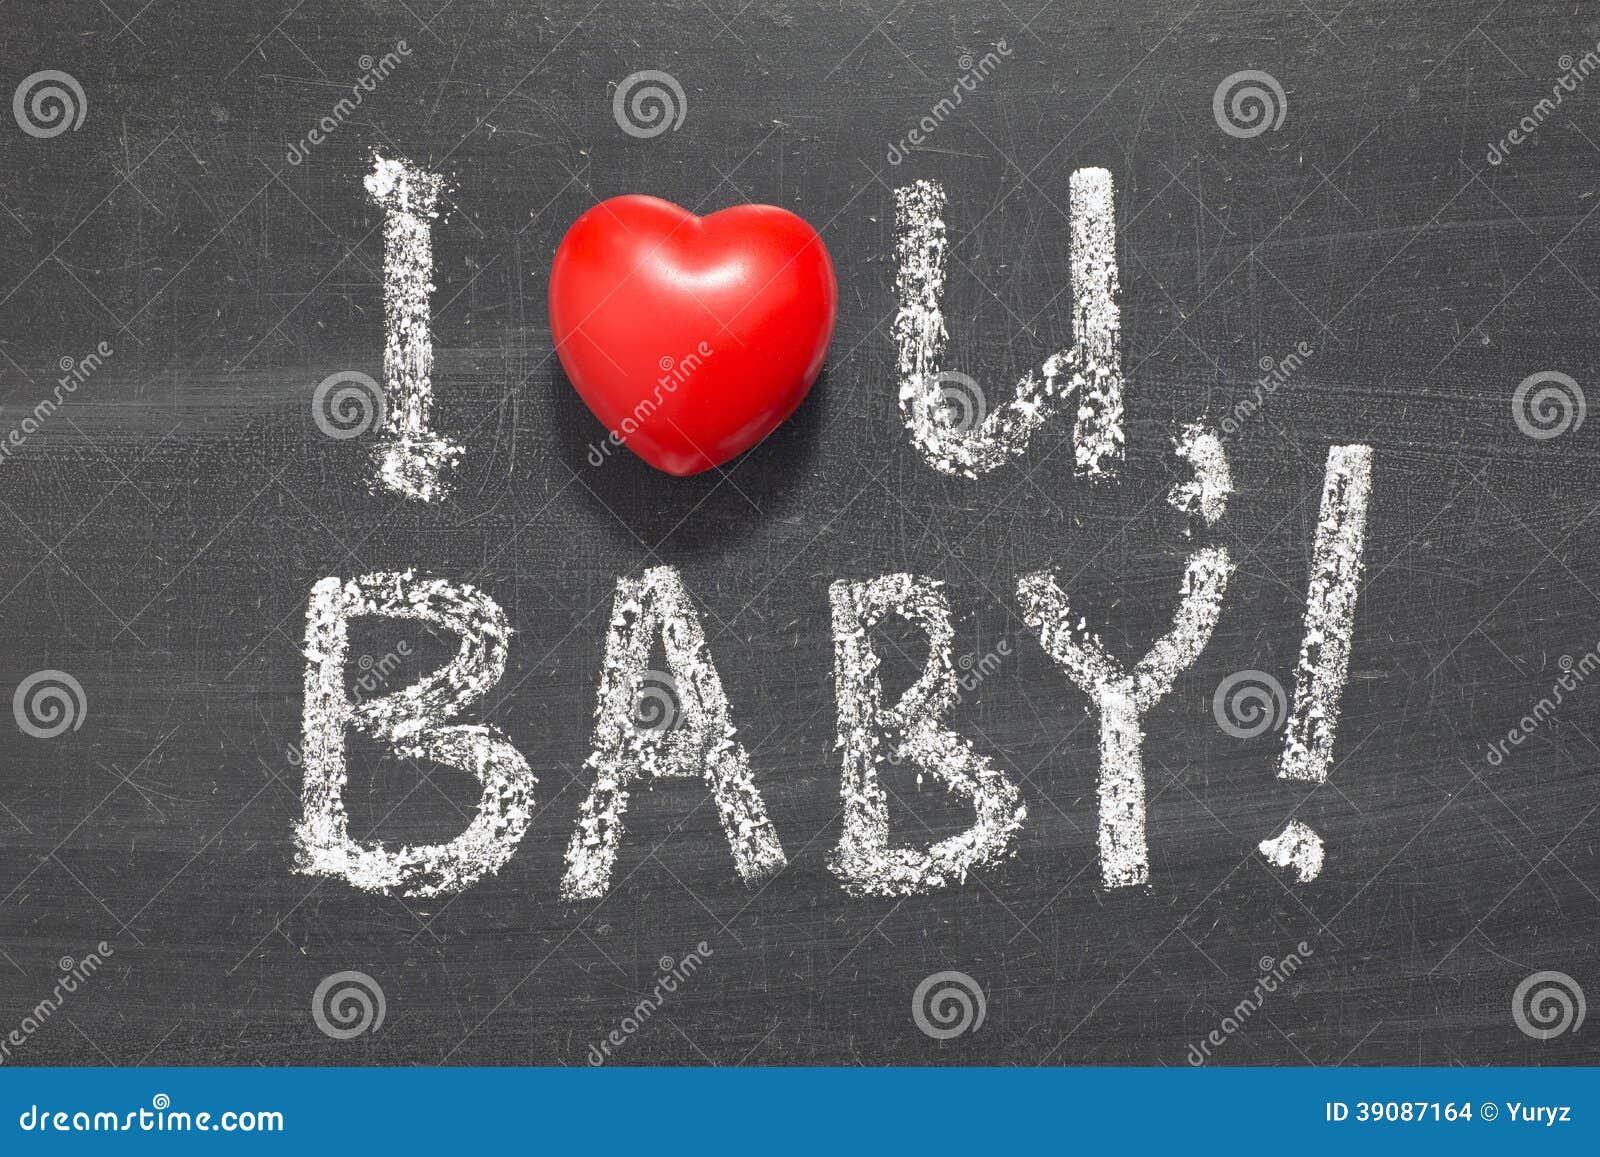 Песня ай май лове. Ай лов ю Беби. I Love you Baby картинки. I Love you Baby рисунок. Надписи i Love you Бэйби.